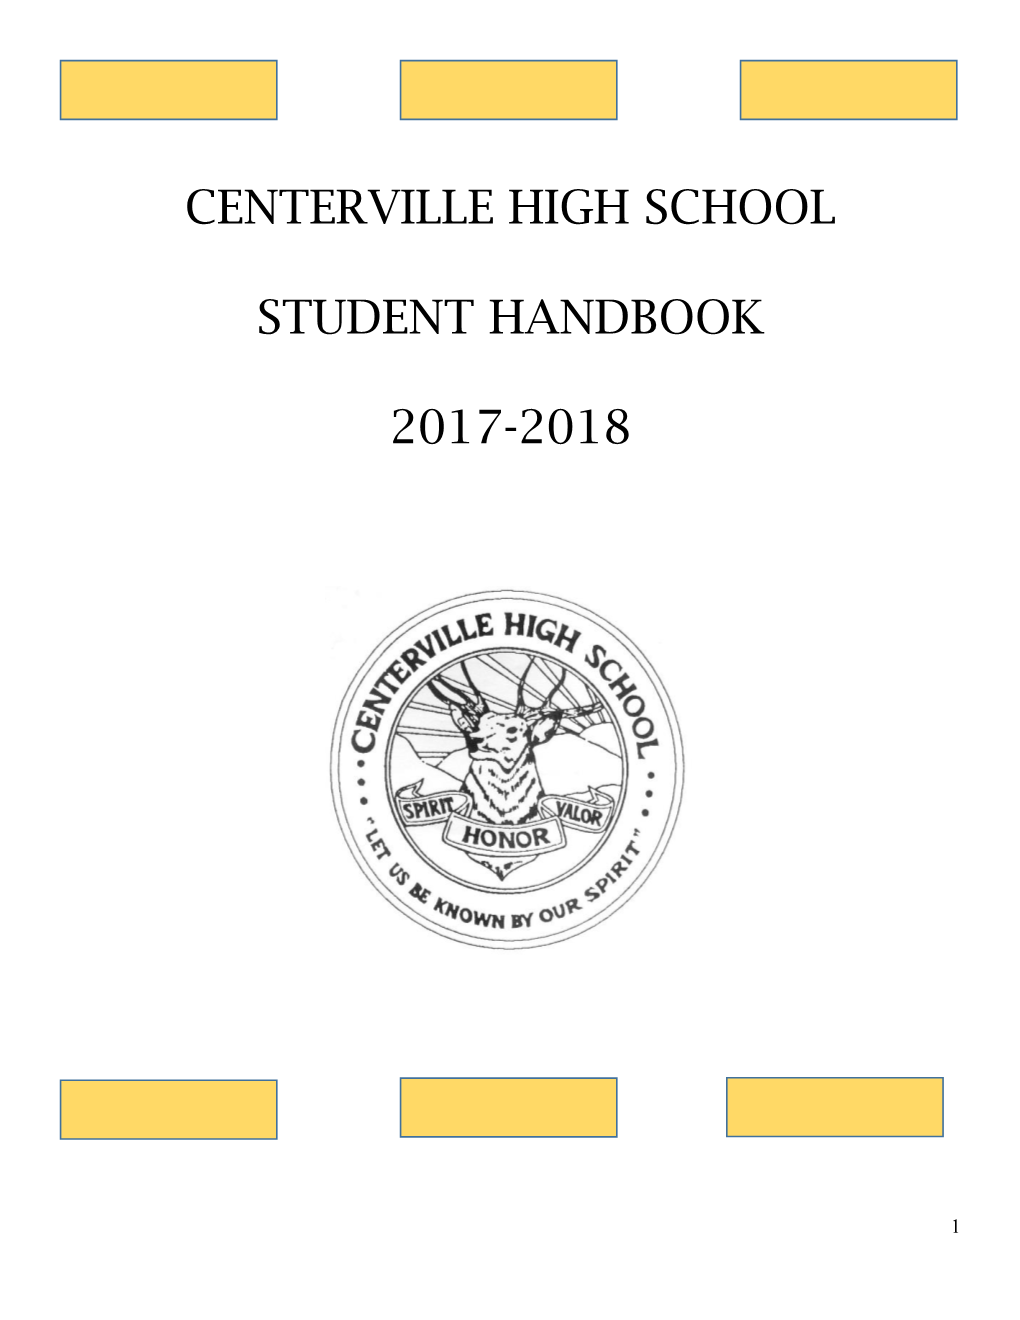 Centerville High School Student Handbook 2017-2018